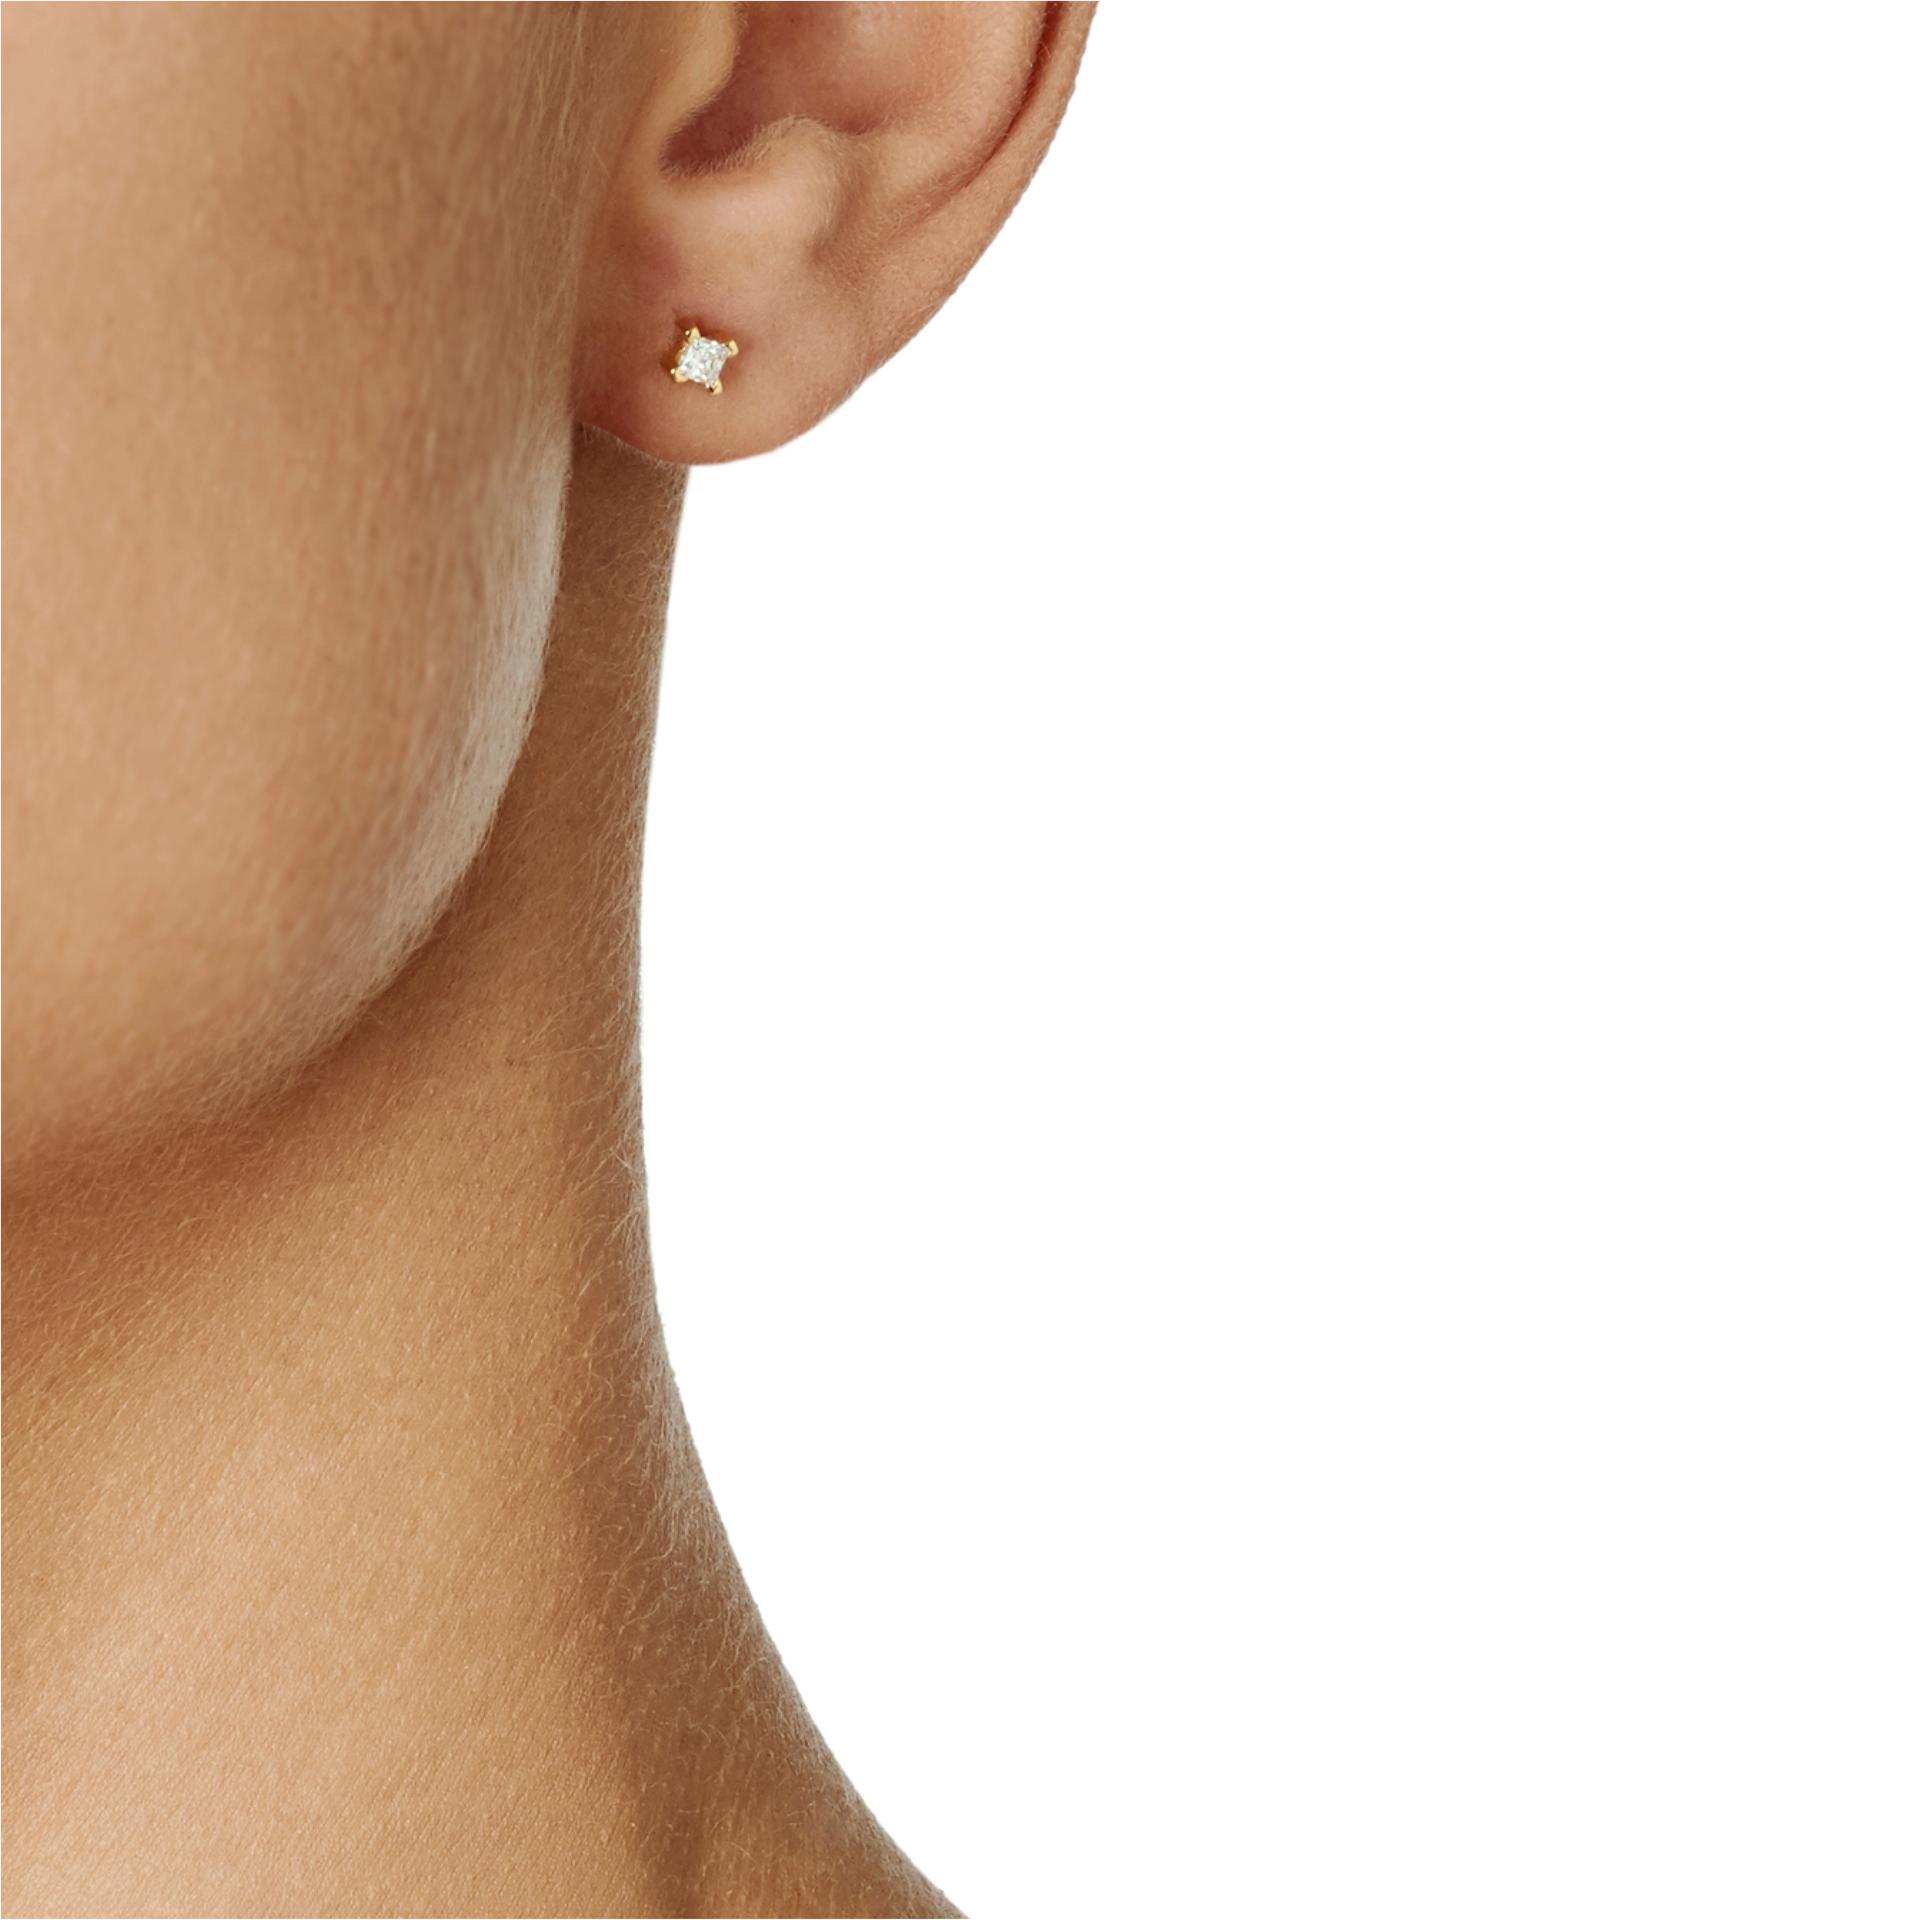 DOLCE VITA PRINCESS EAR